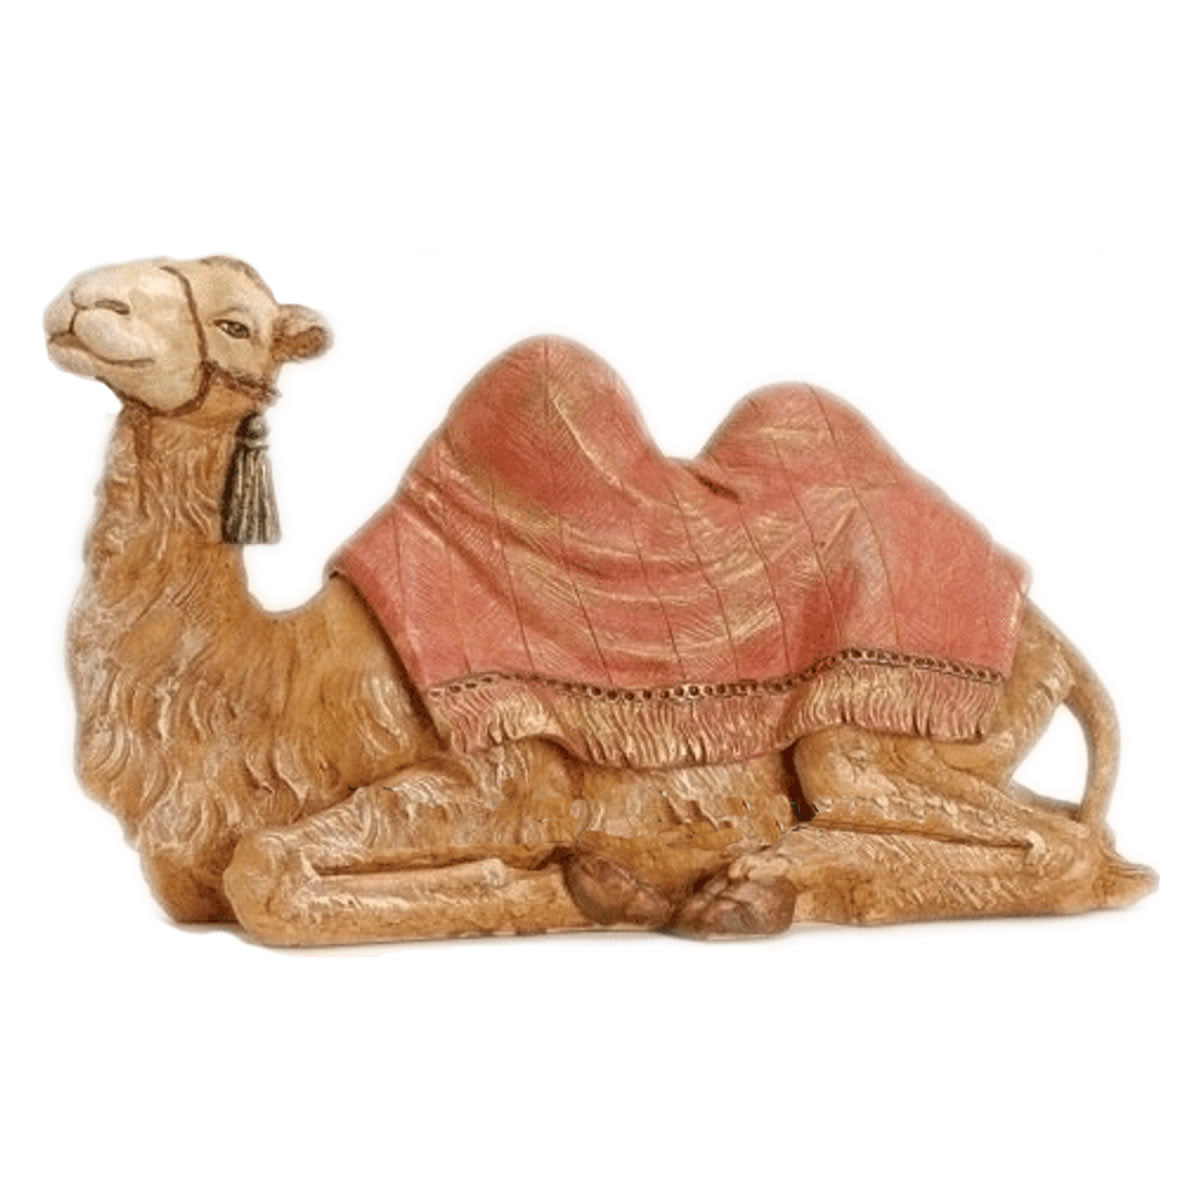 Fontanini Seated Camel Nativity Statue- 18 Inch Scale